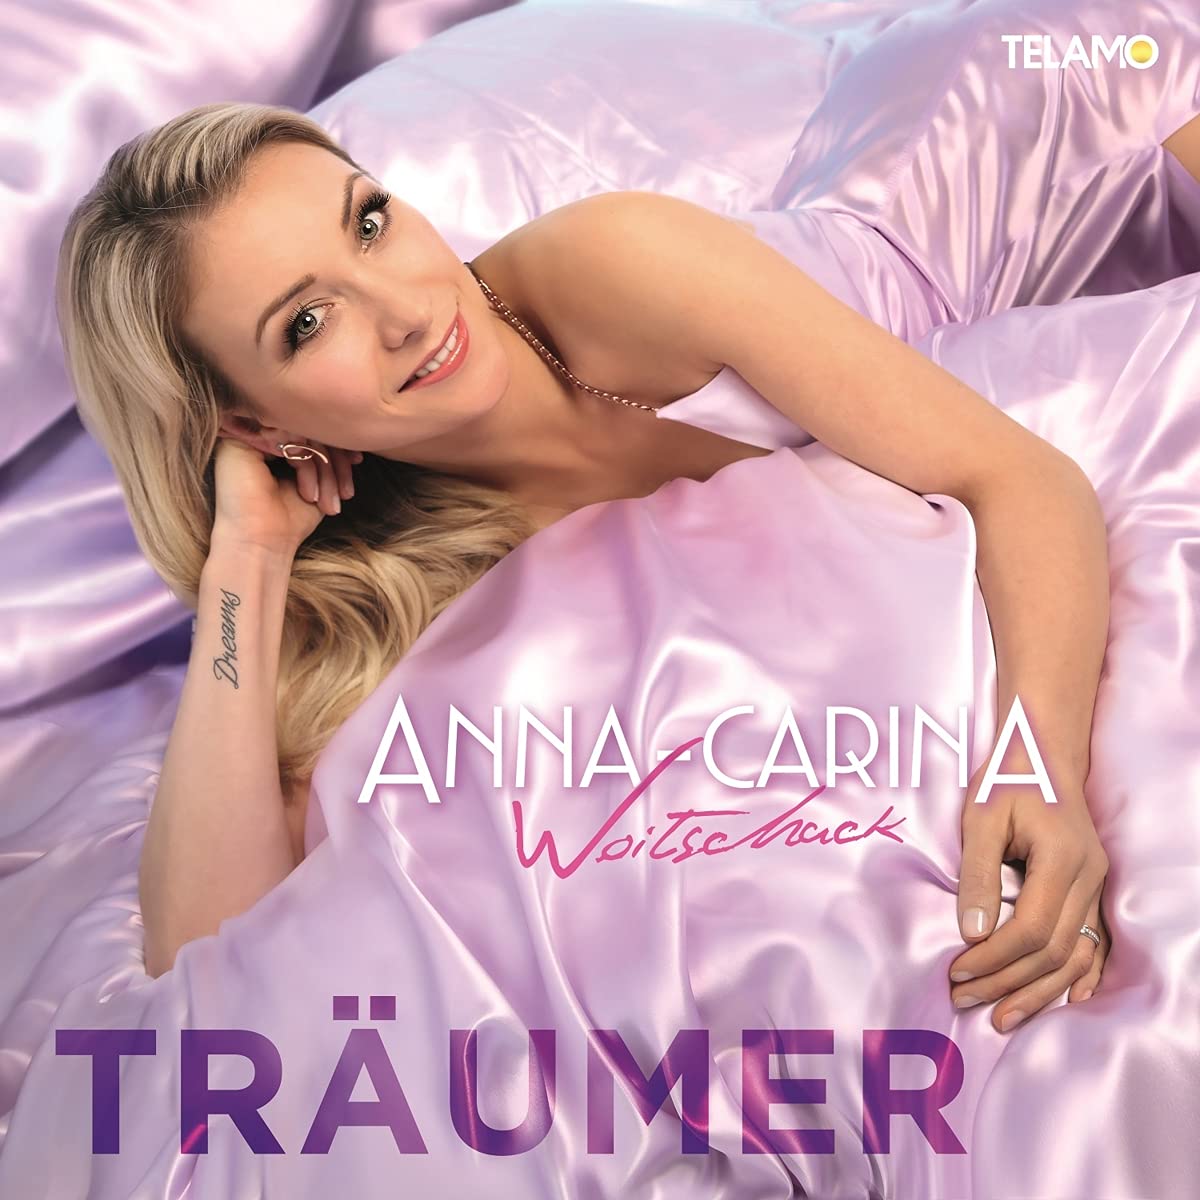 Anna-Carina Woitschack - Träumer (2021) 